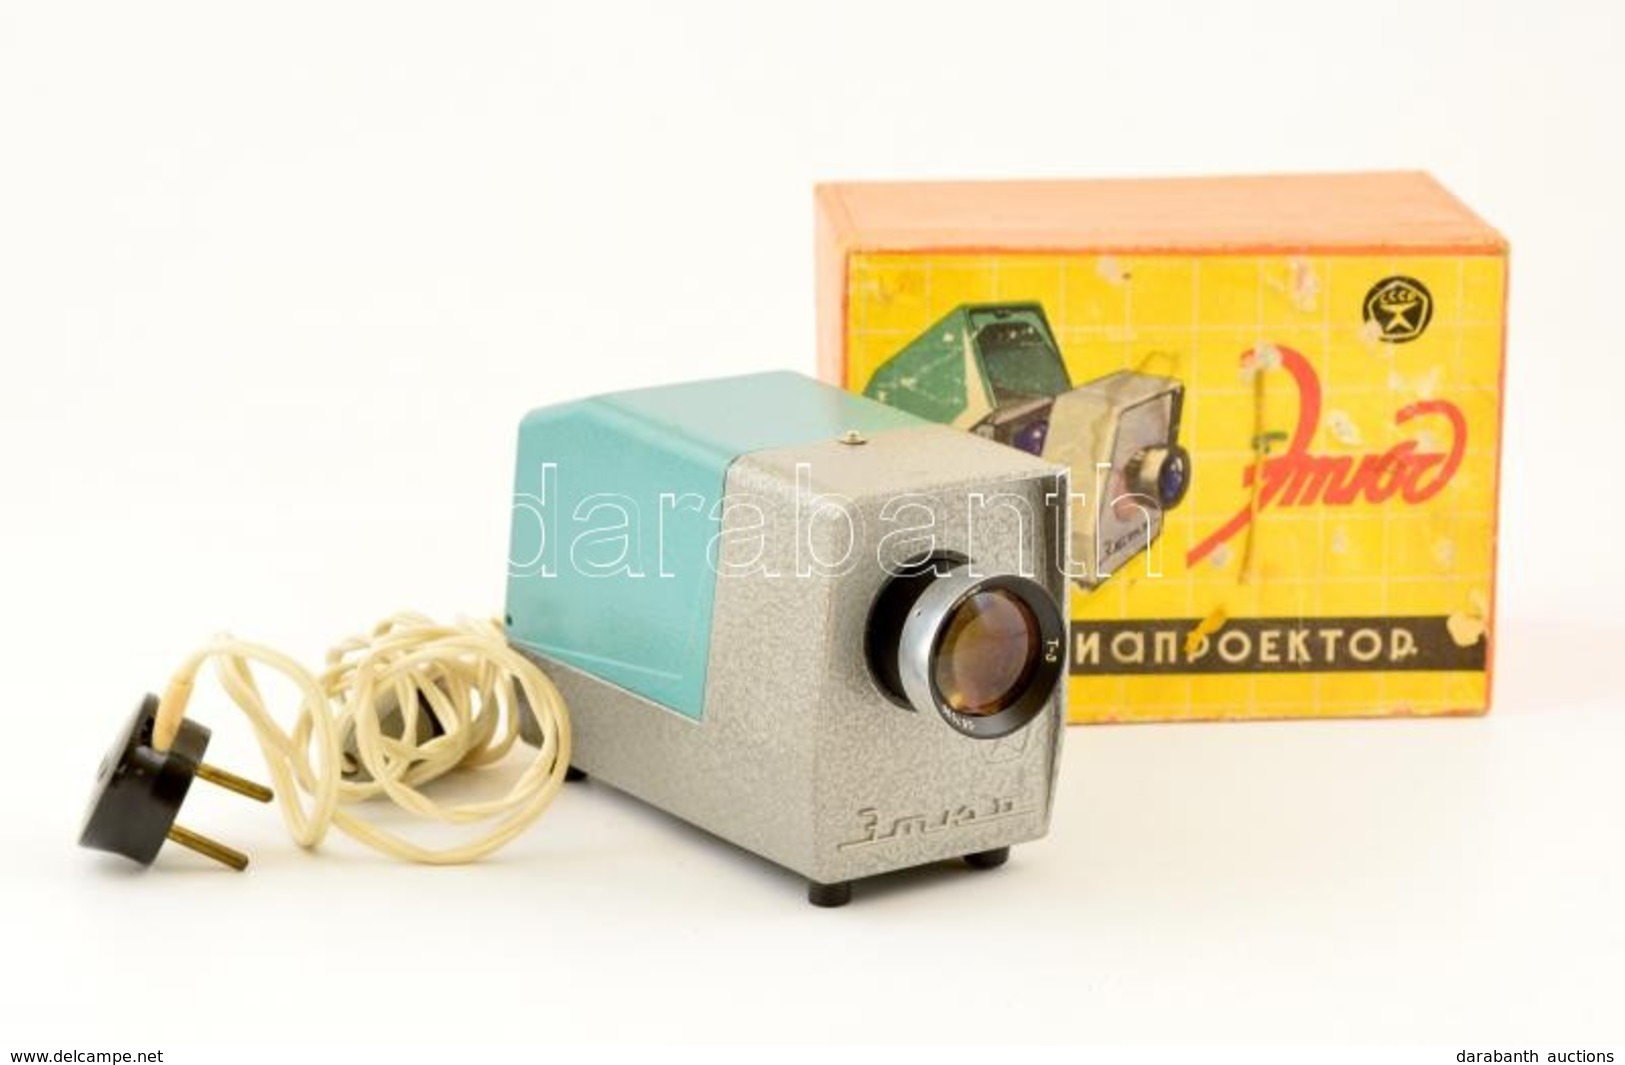 FED Etud Diavetítő, Eredeti Dobozában, Jó állapotban  / Vintage Russian Slide-projector, With Original Box, In Good Cond - Fotoapparate